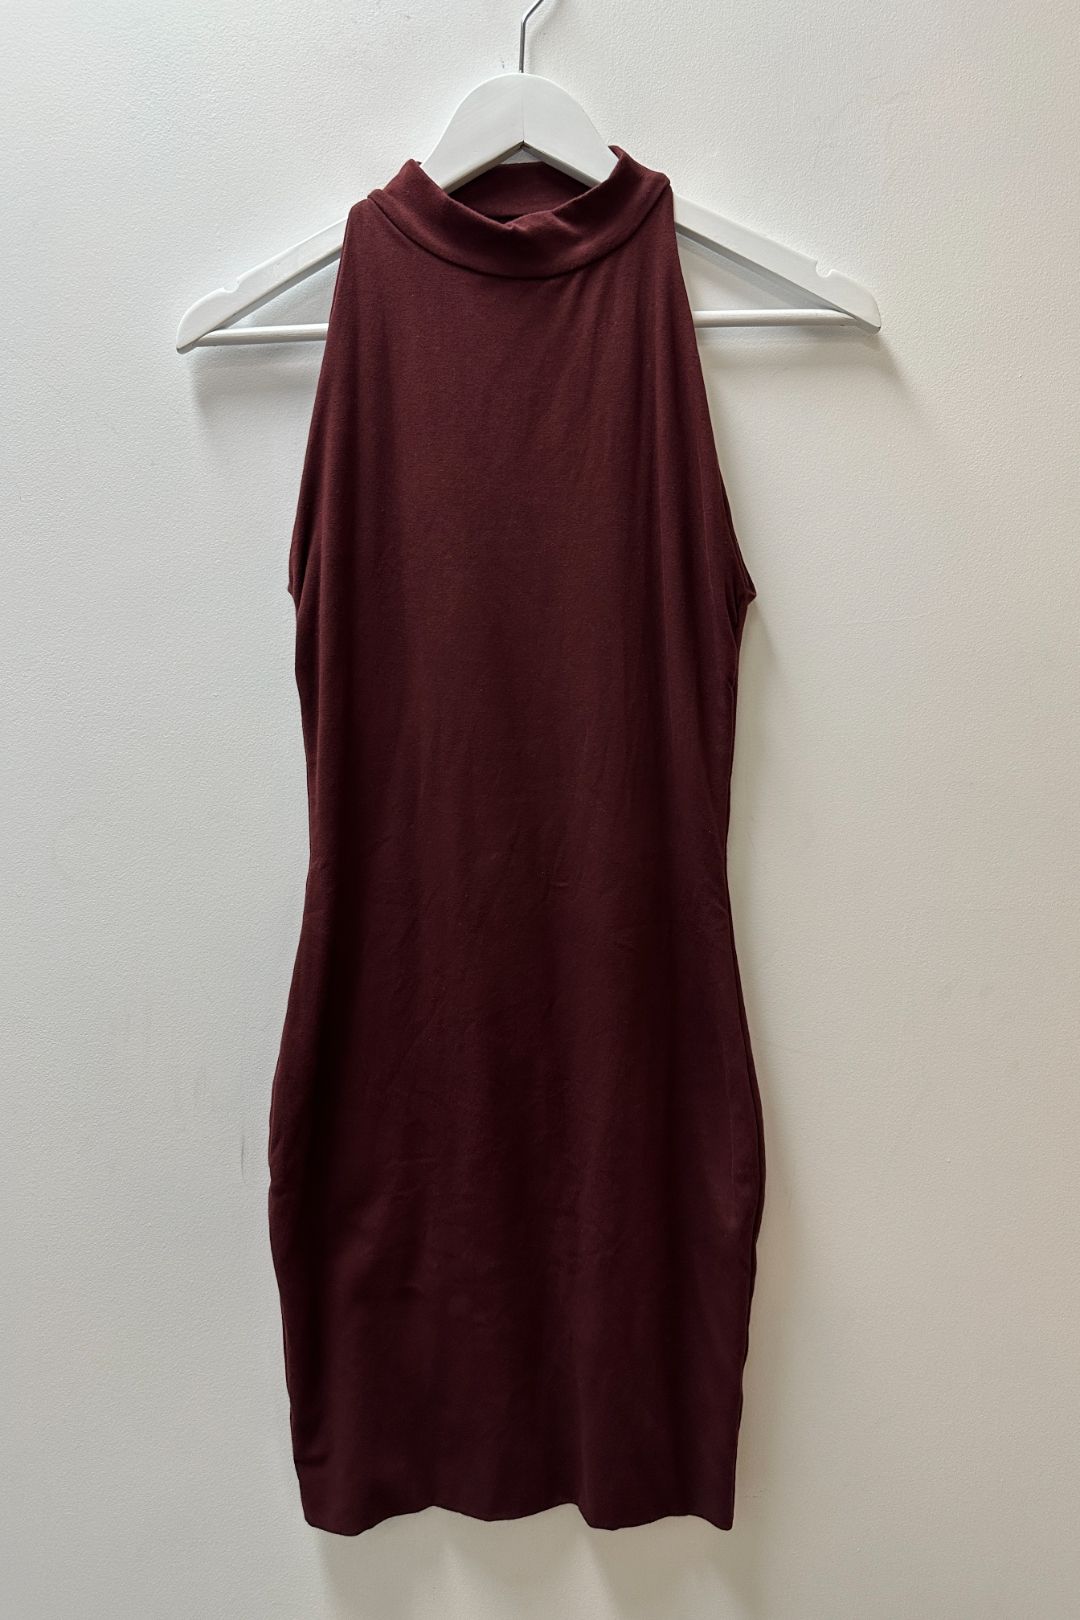 Kookai Burgundy Bodycon Mini Dress